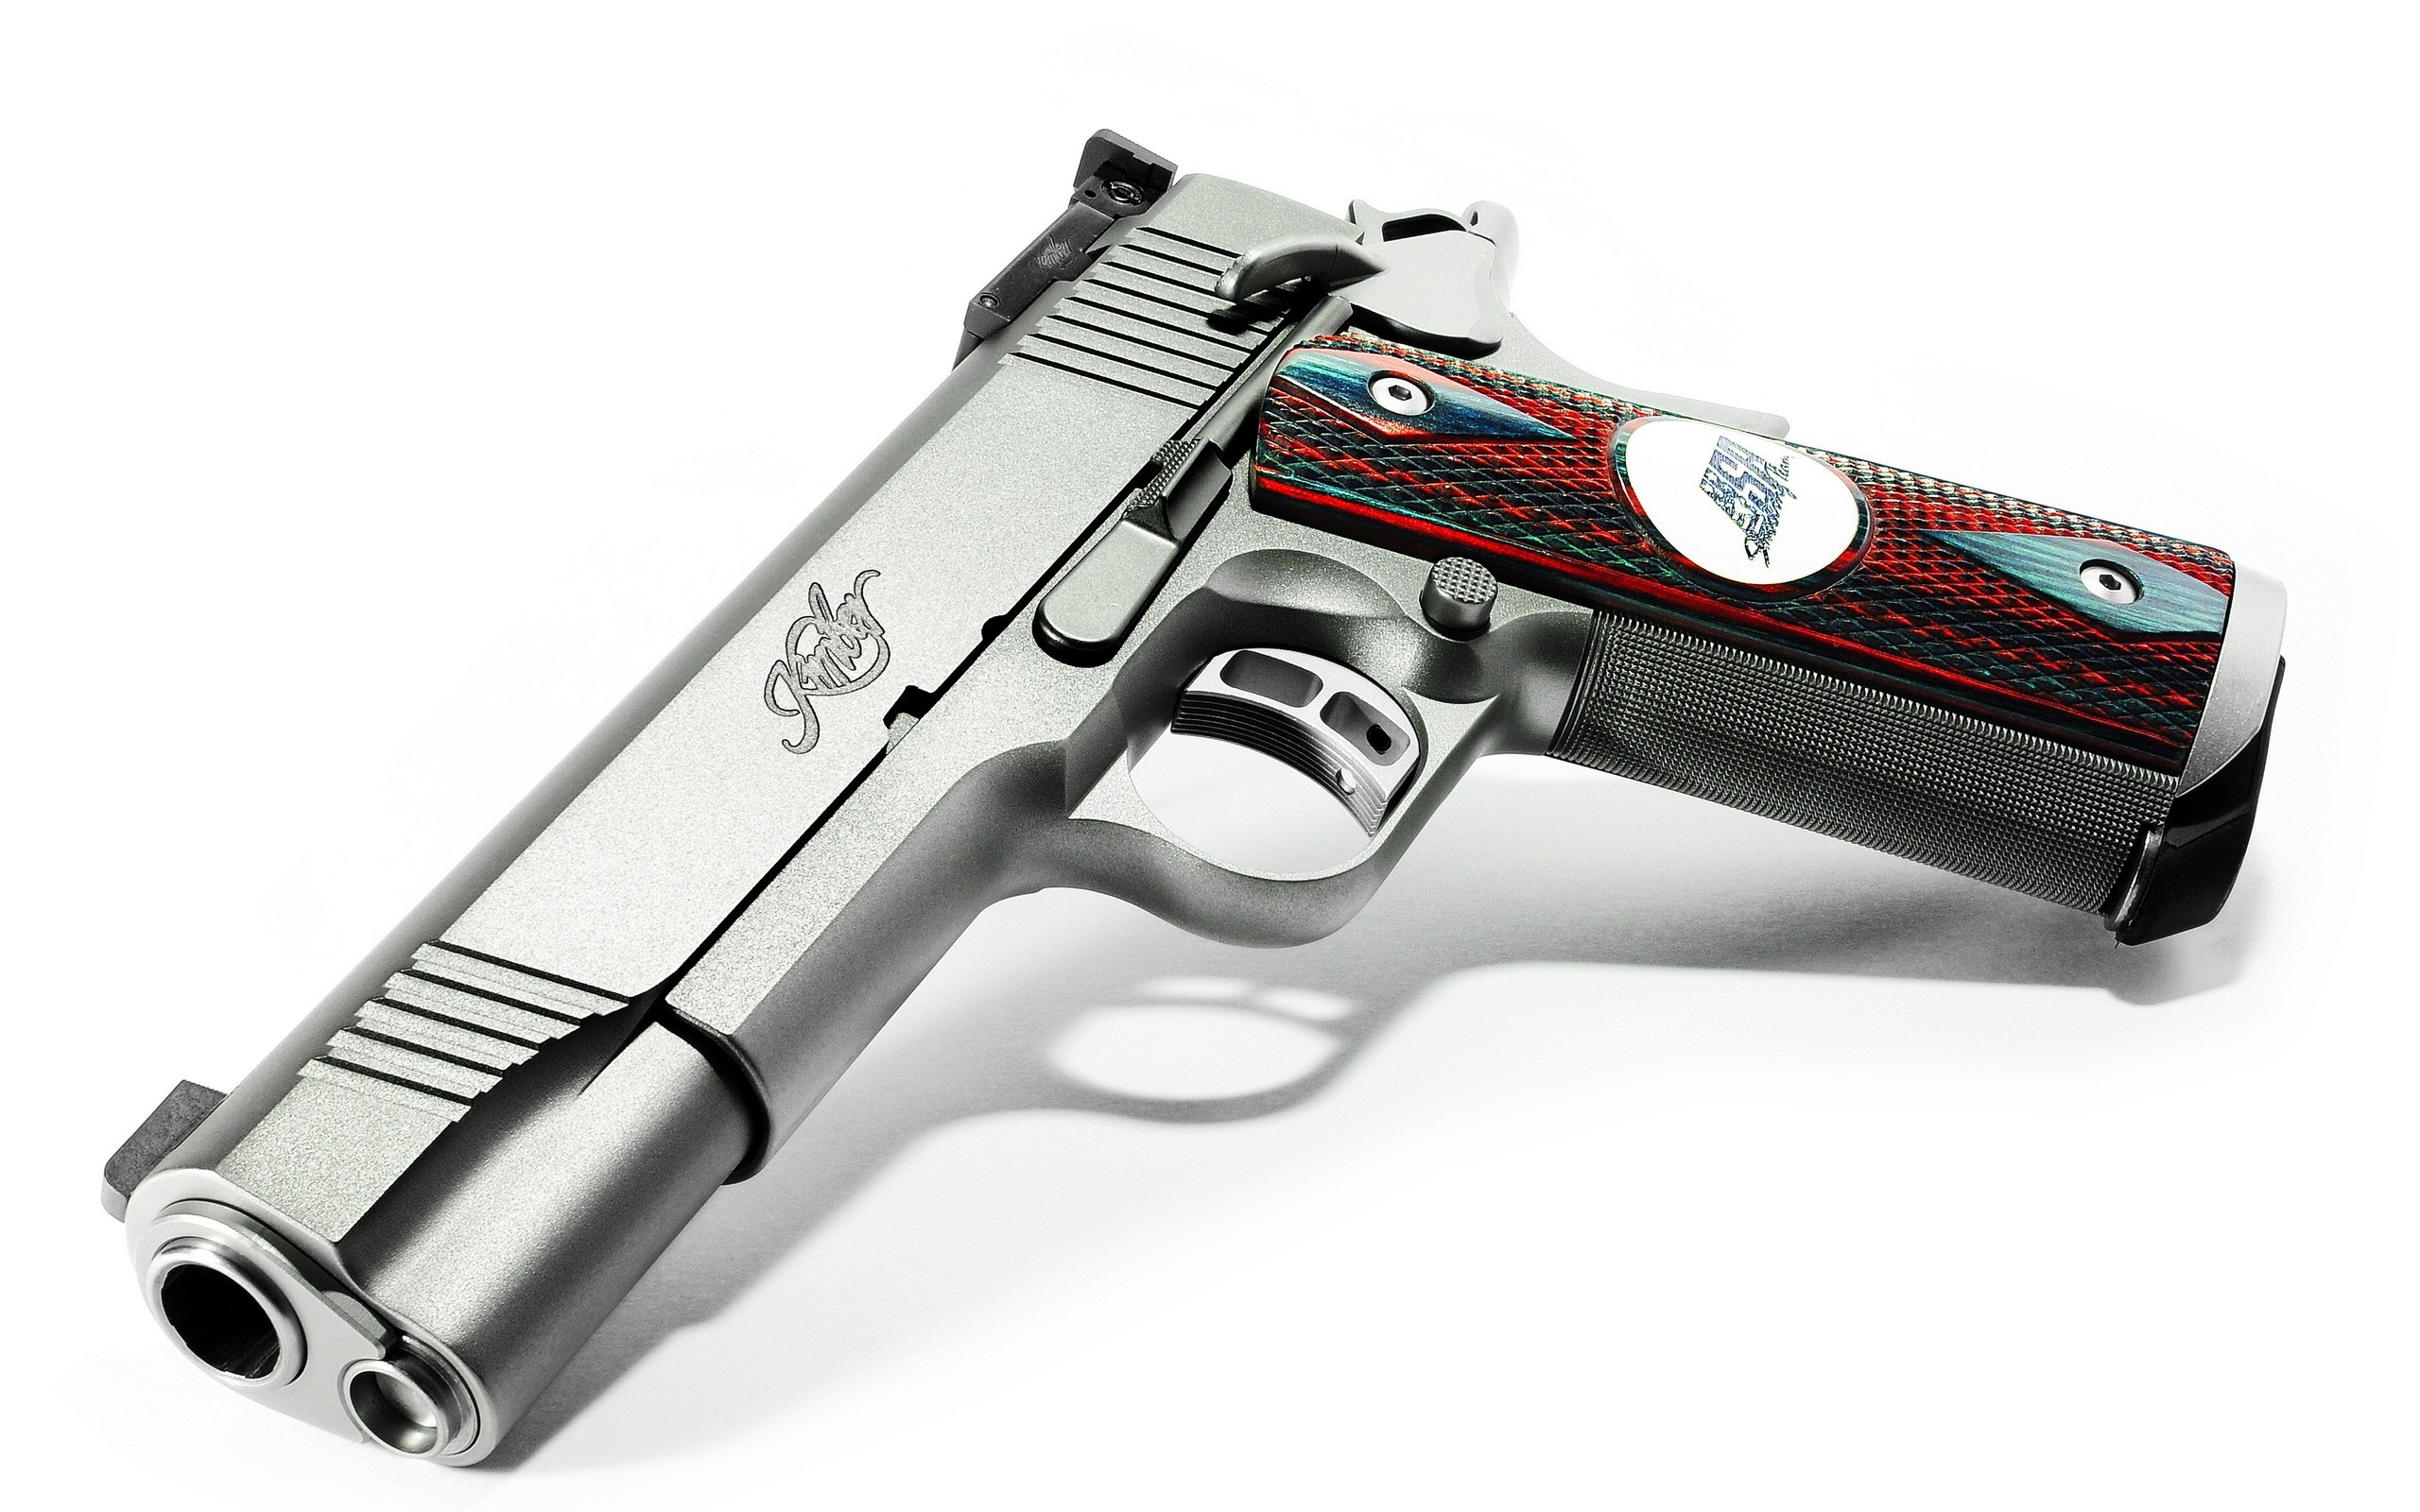 General 2560x1600 gun weapon white background simple background pistol American firearms